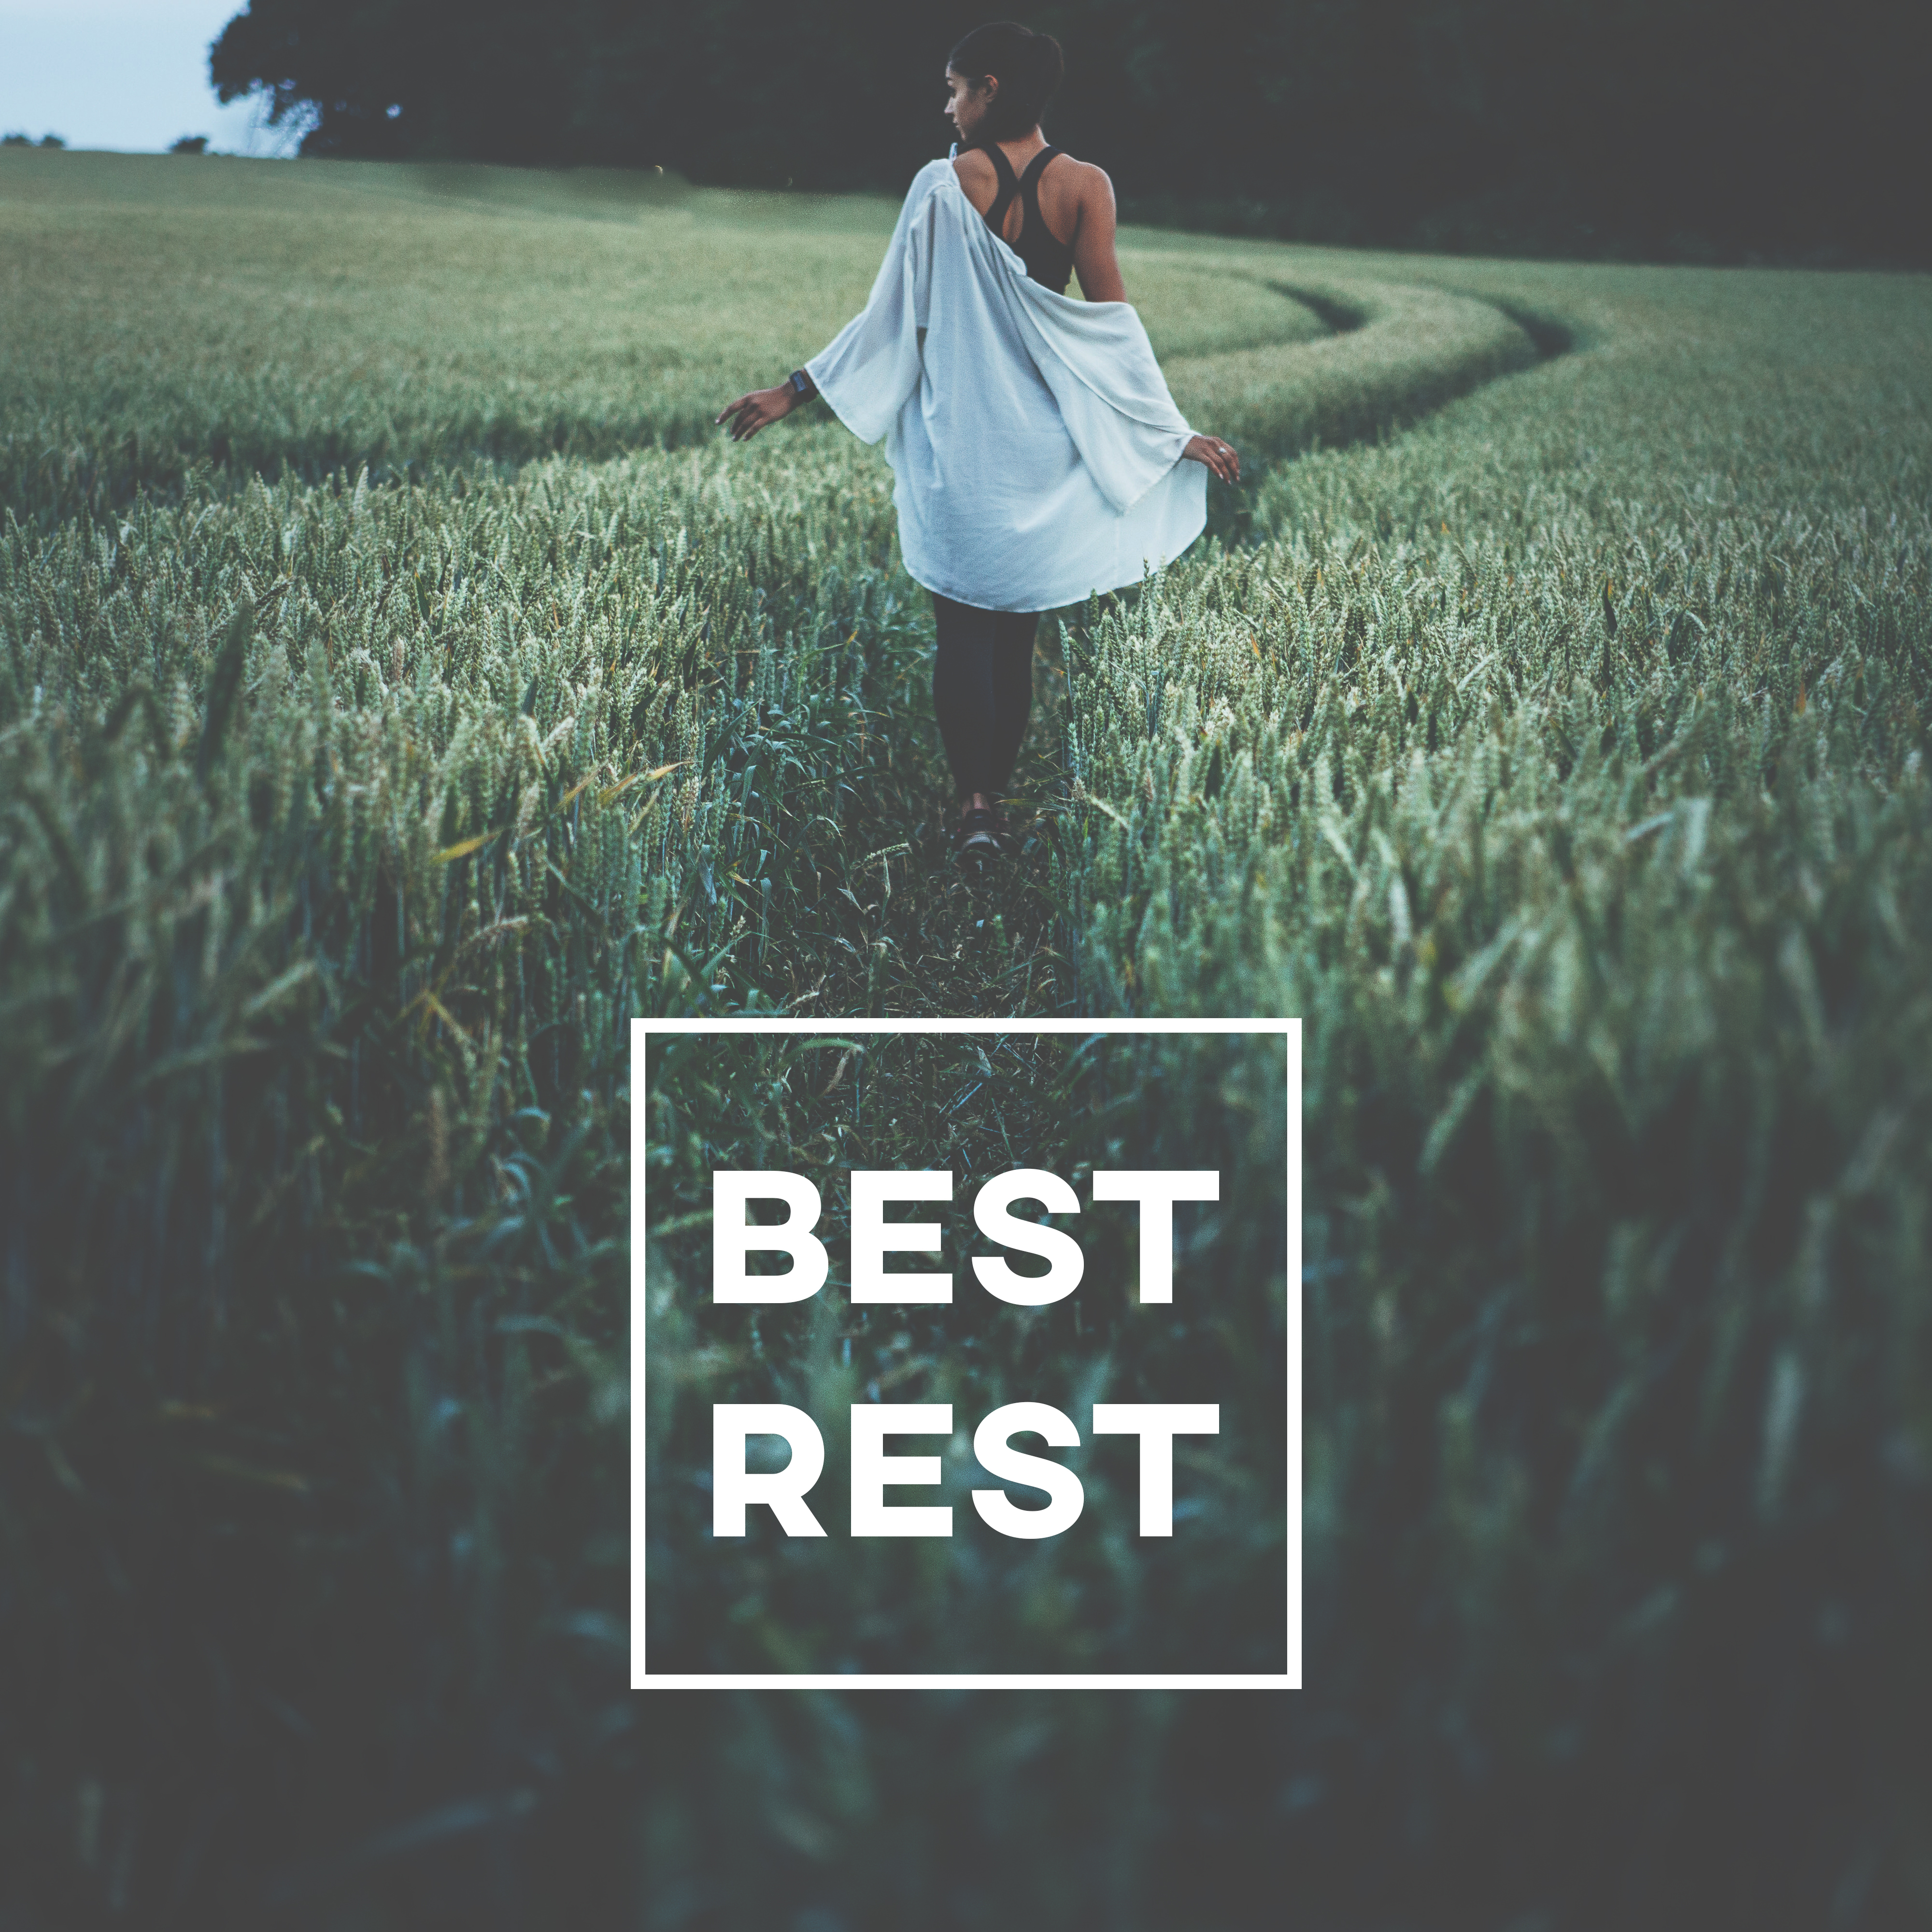 Best Rest - Weekend Breath, Enlightenment, Simple Attitude, Thinking